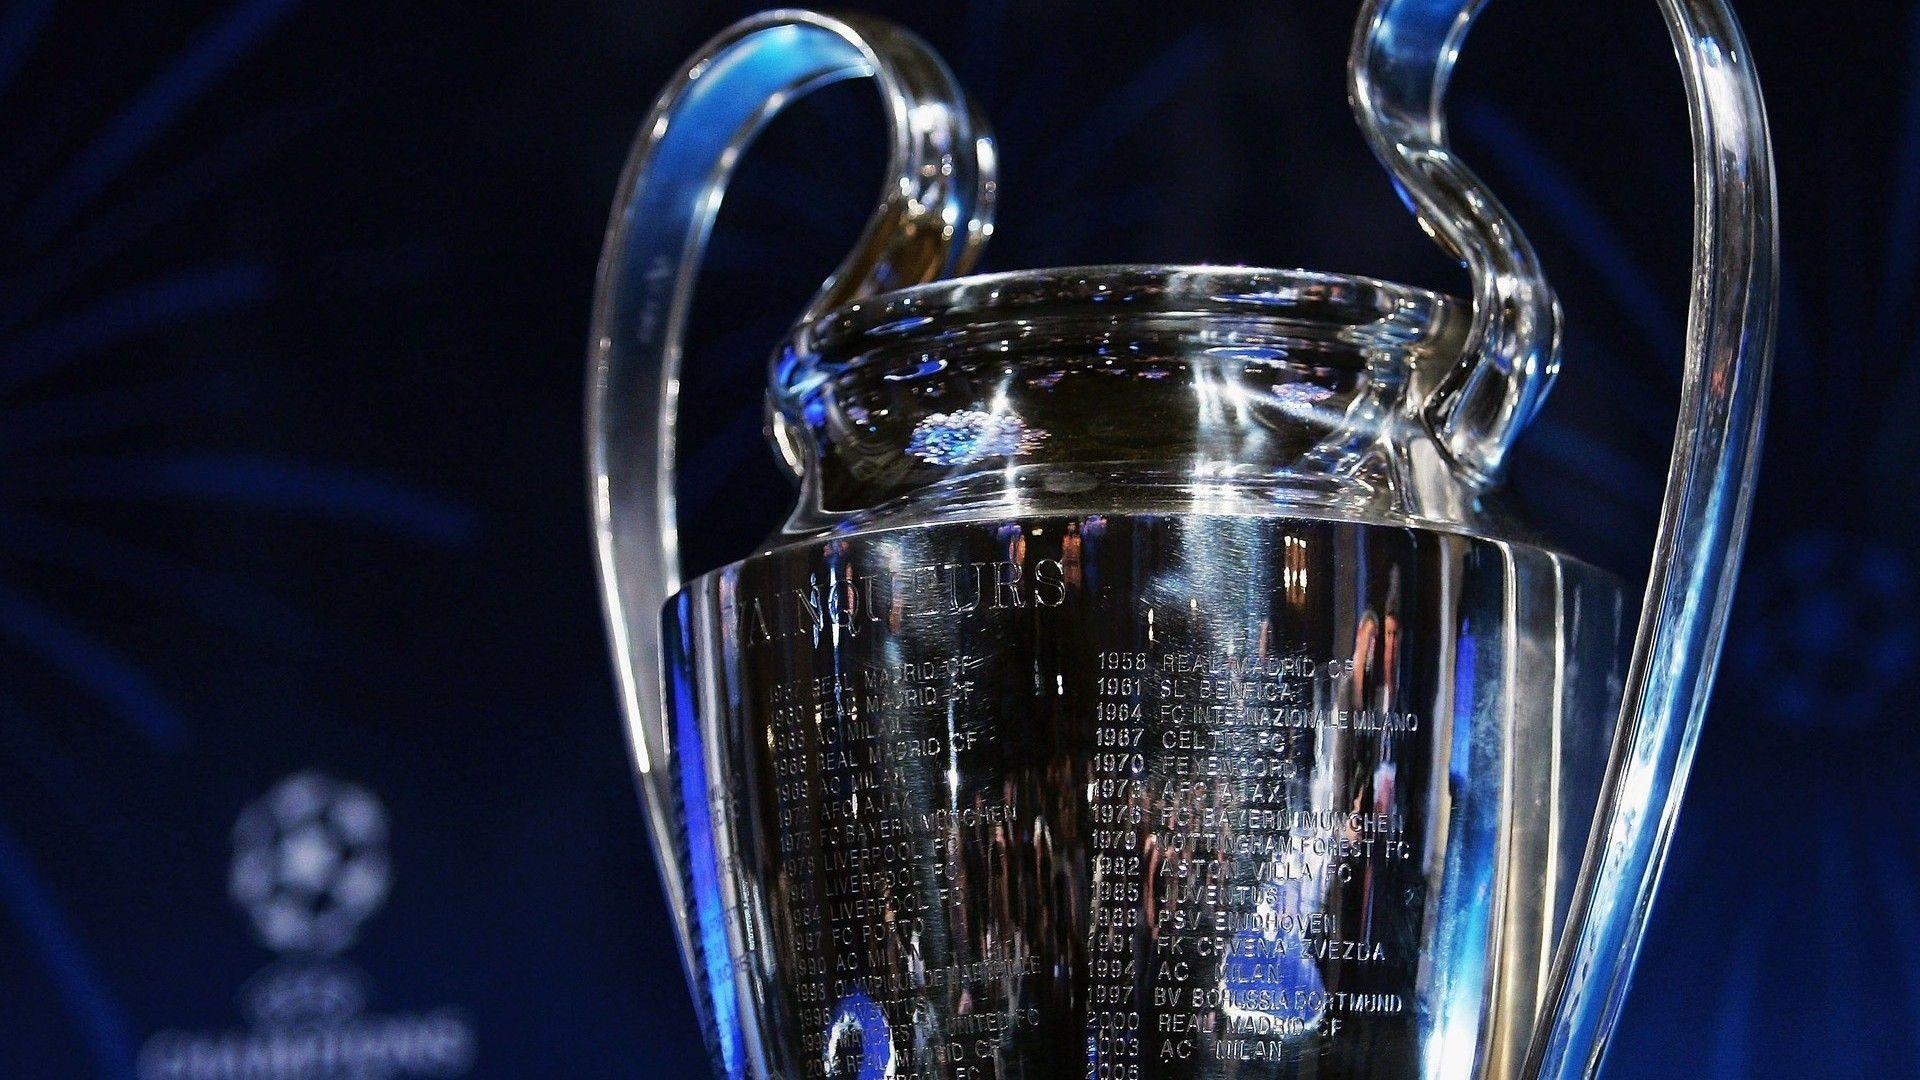 UEFA Champions League trophy Wallpaper